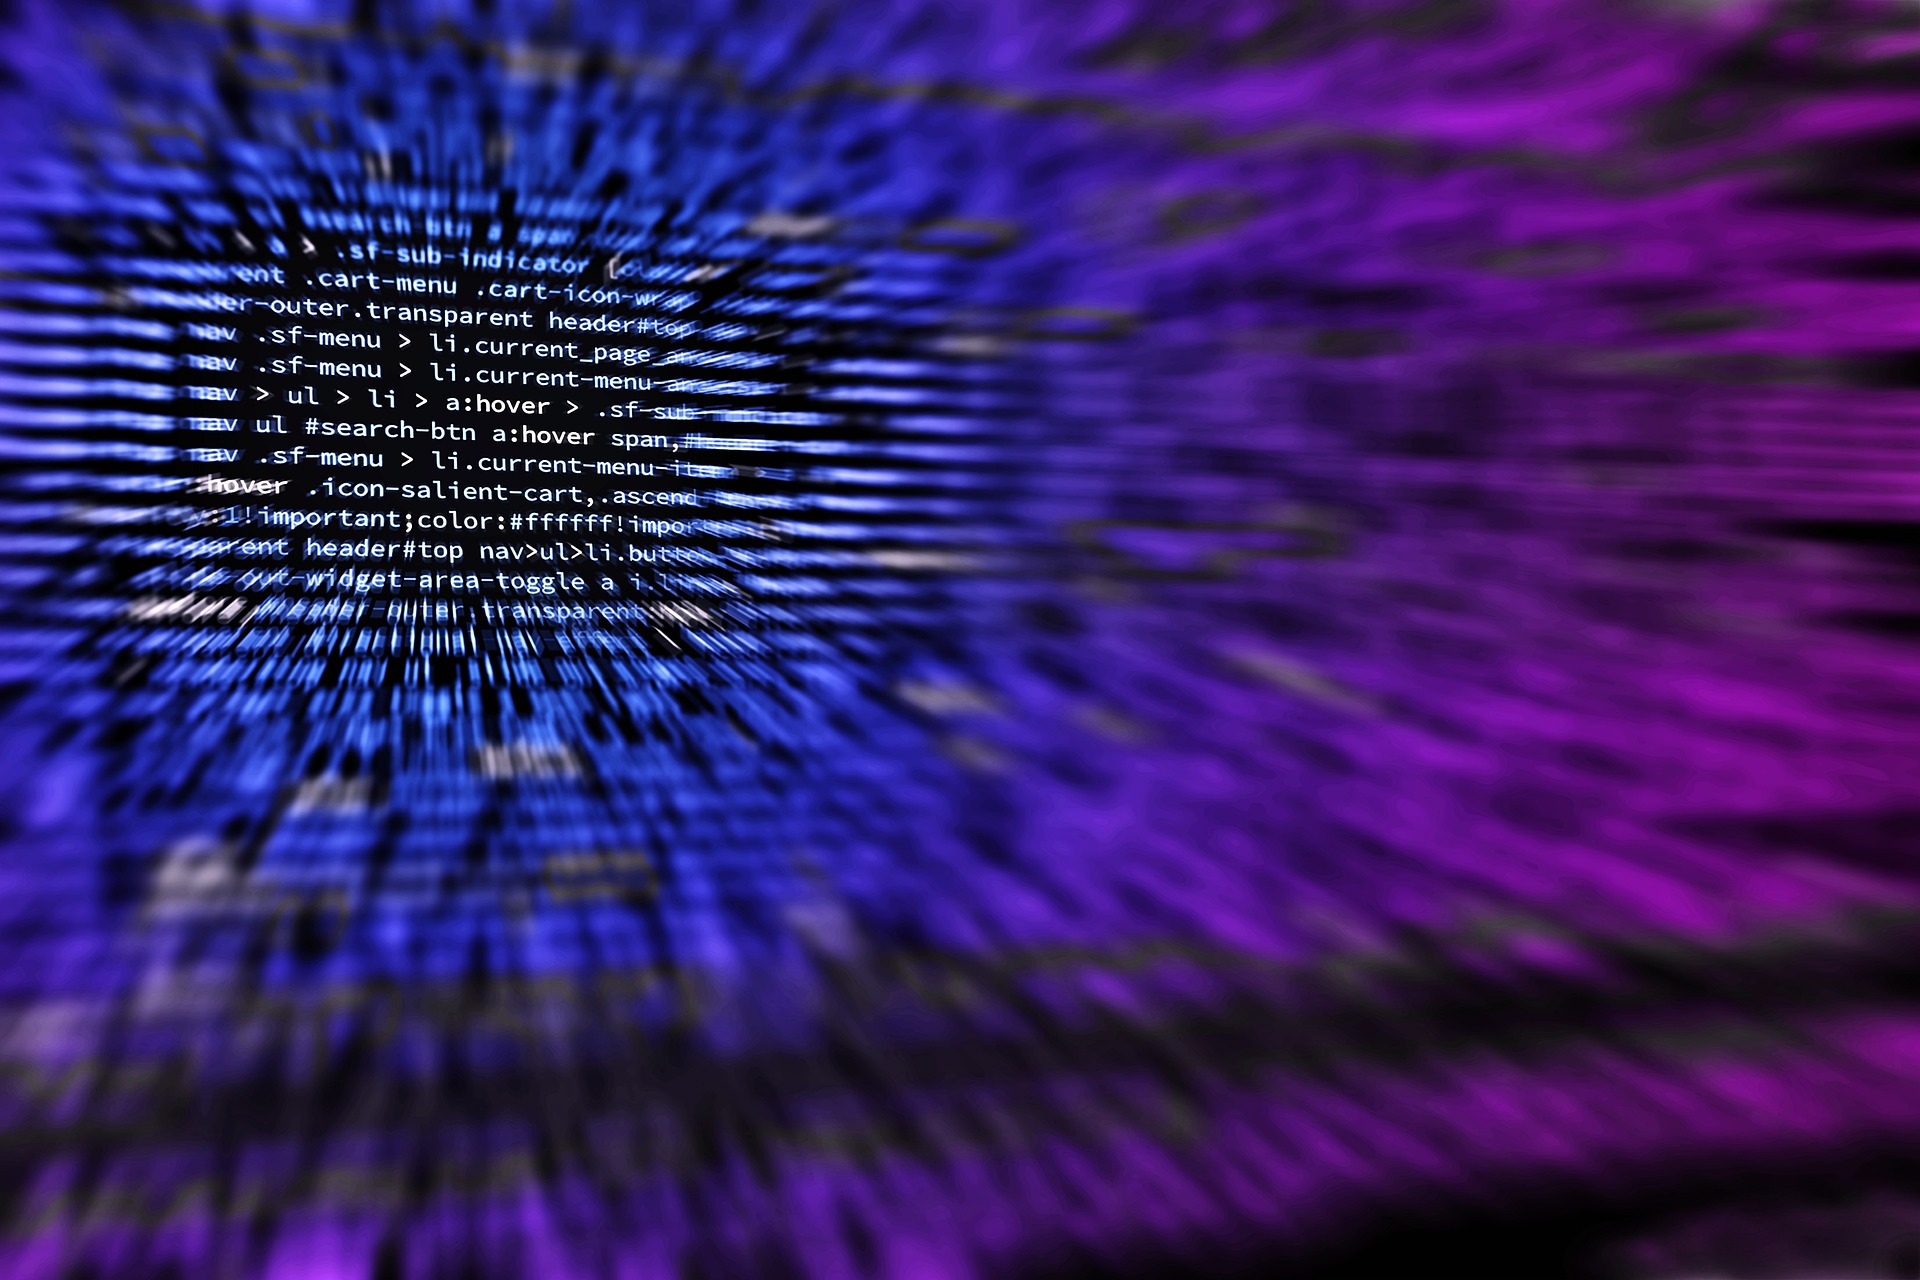 Capita Confirms Data Stolen in Ransomware Attack